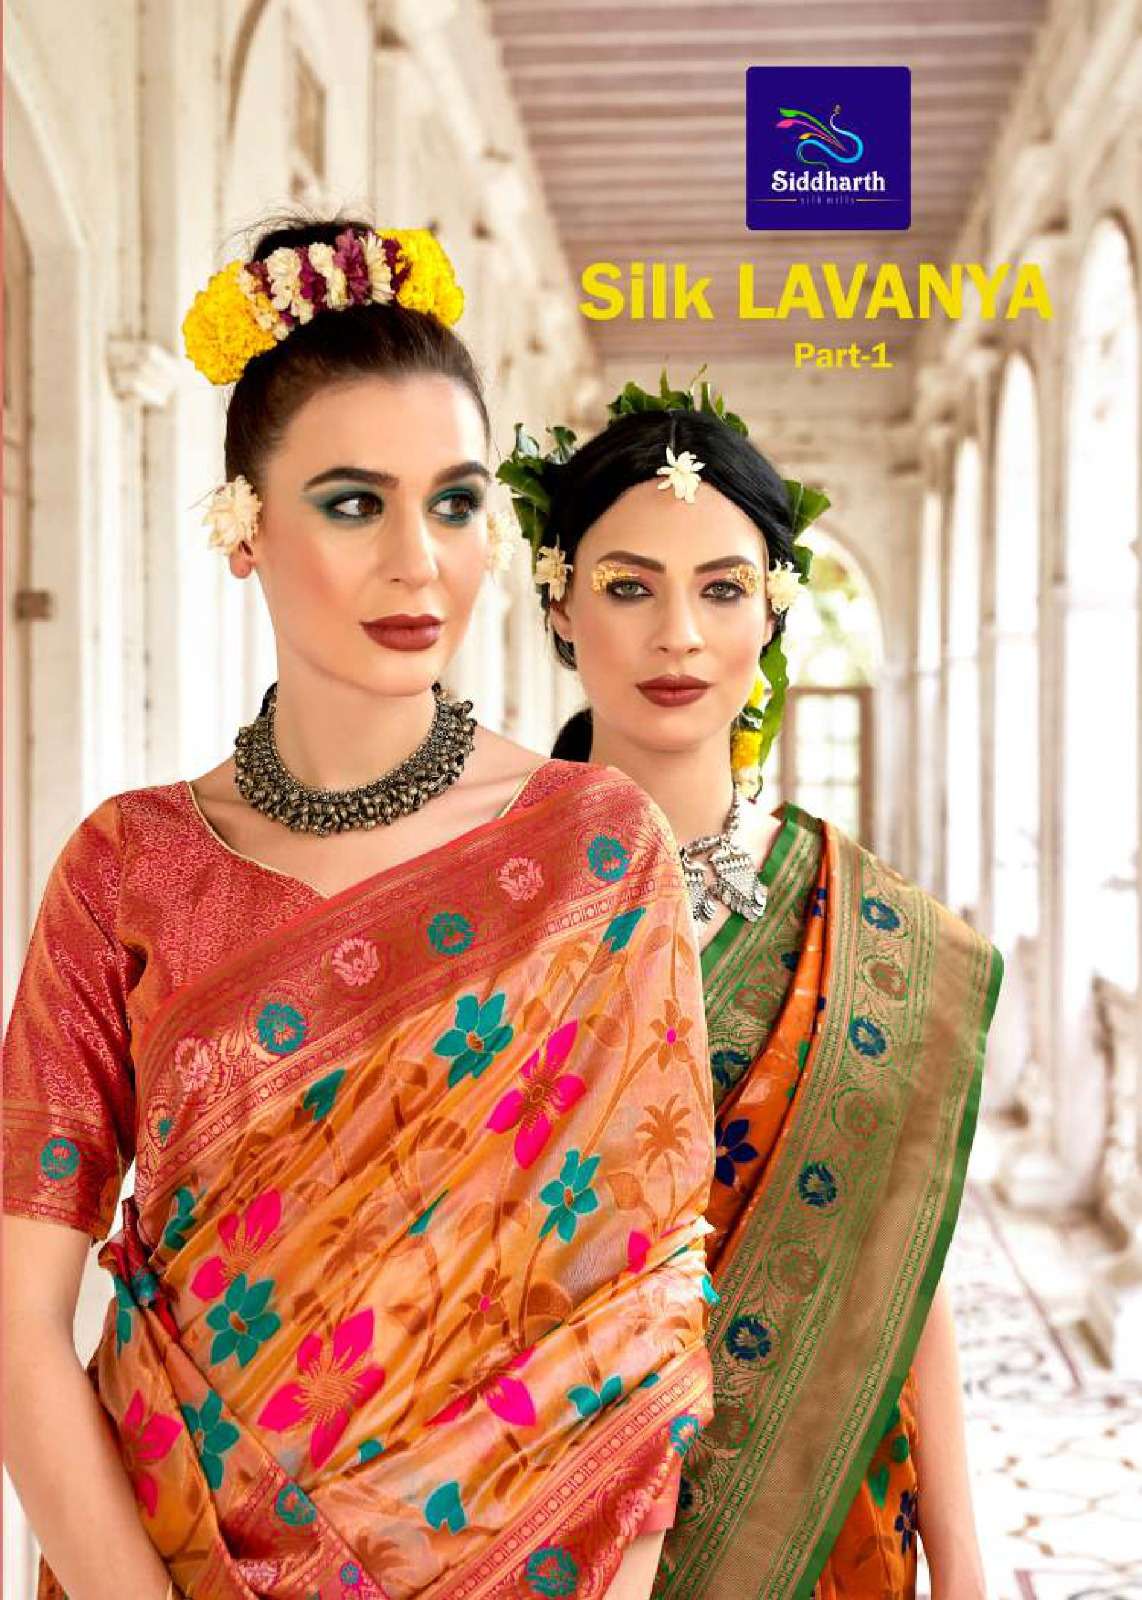 siddharth silk mills launch silk lavanya amazing designs fancy saree supplier